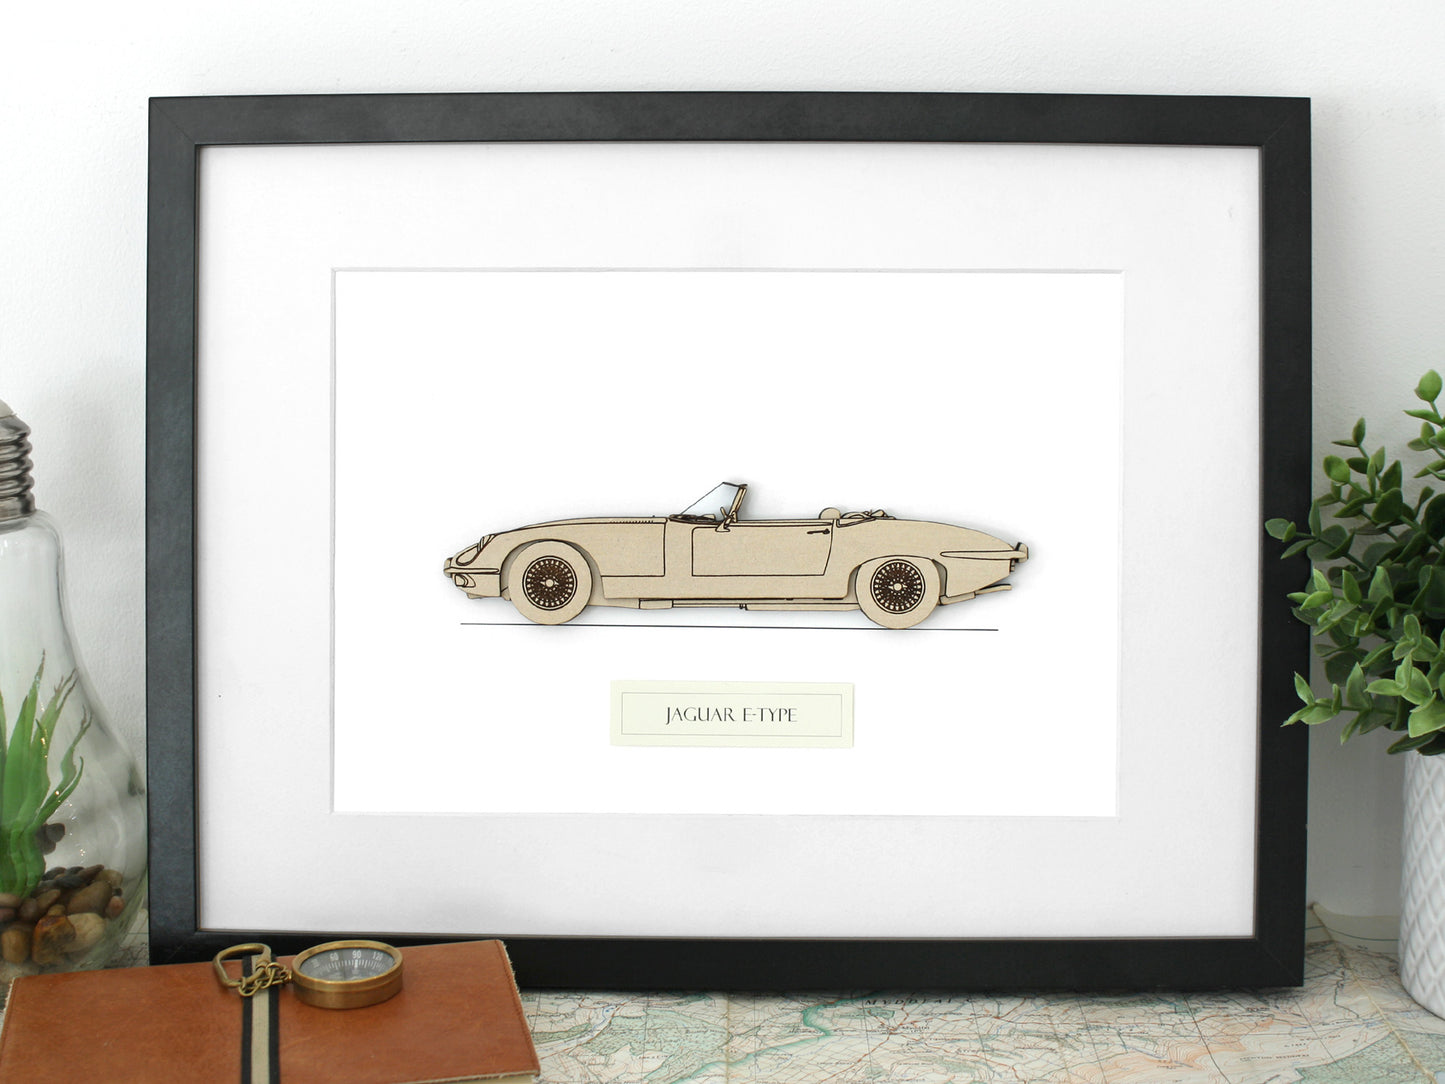 Jaguar E-Type gifts